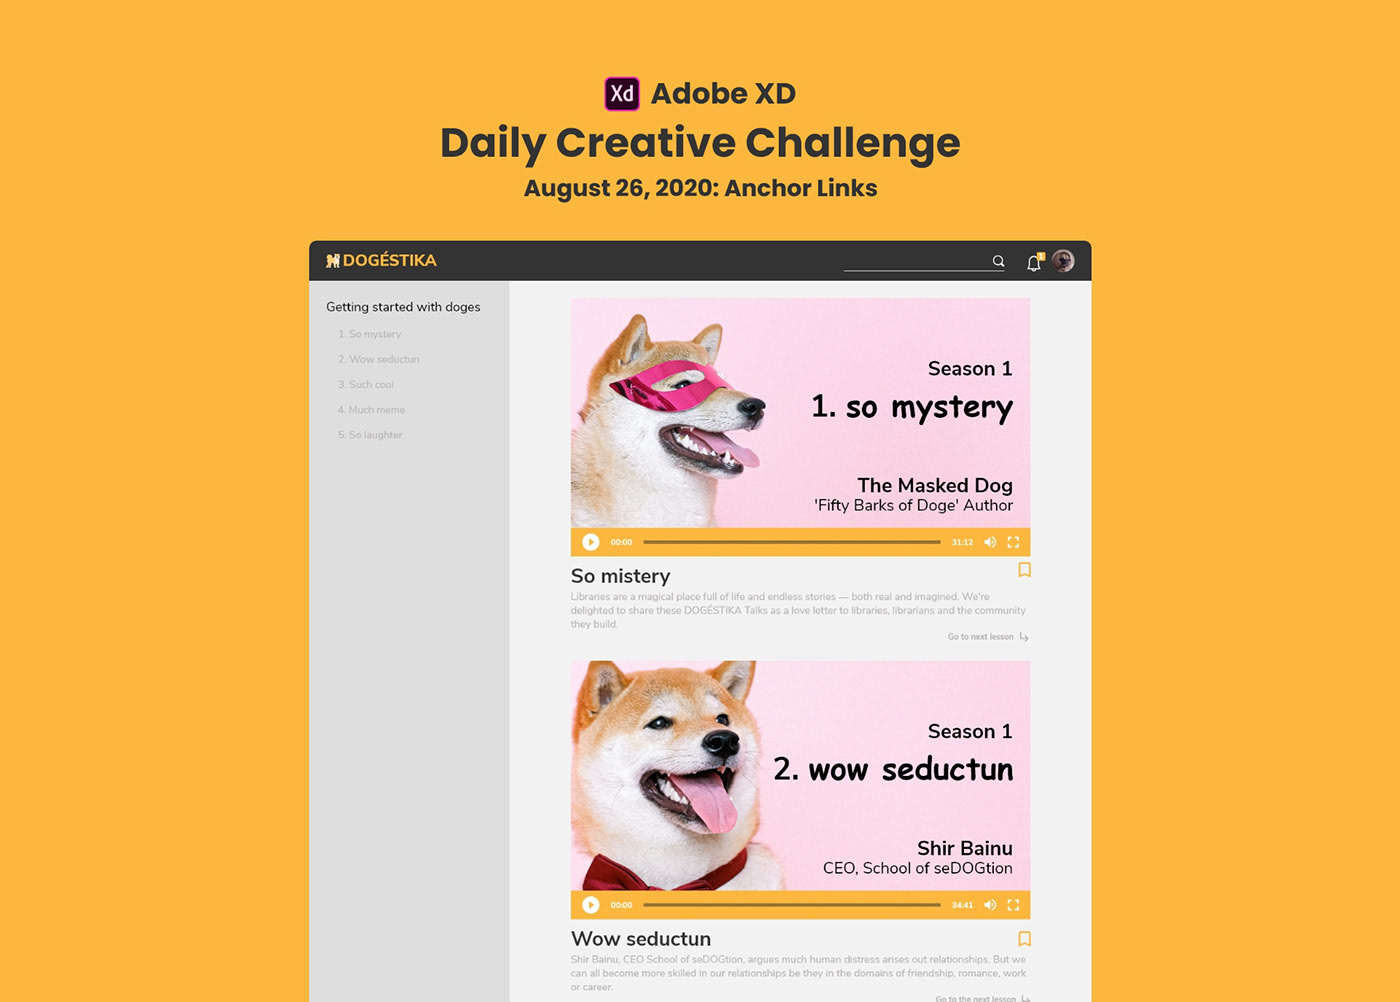 ANCHOR LINKS Daily Creative Challenge Danilleo doge domestika